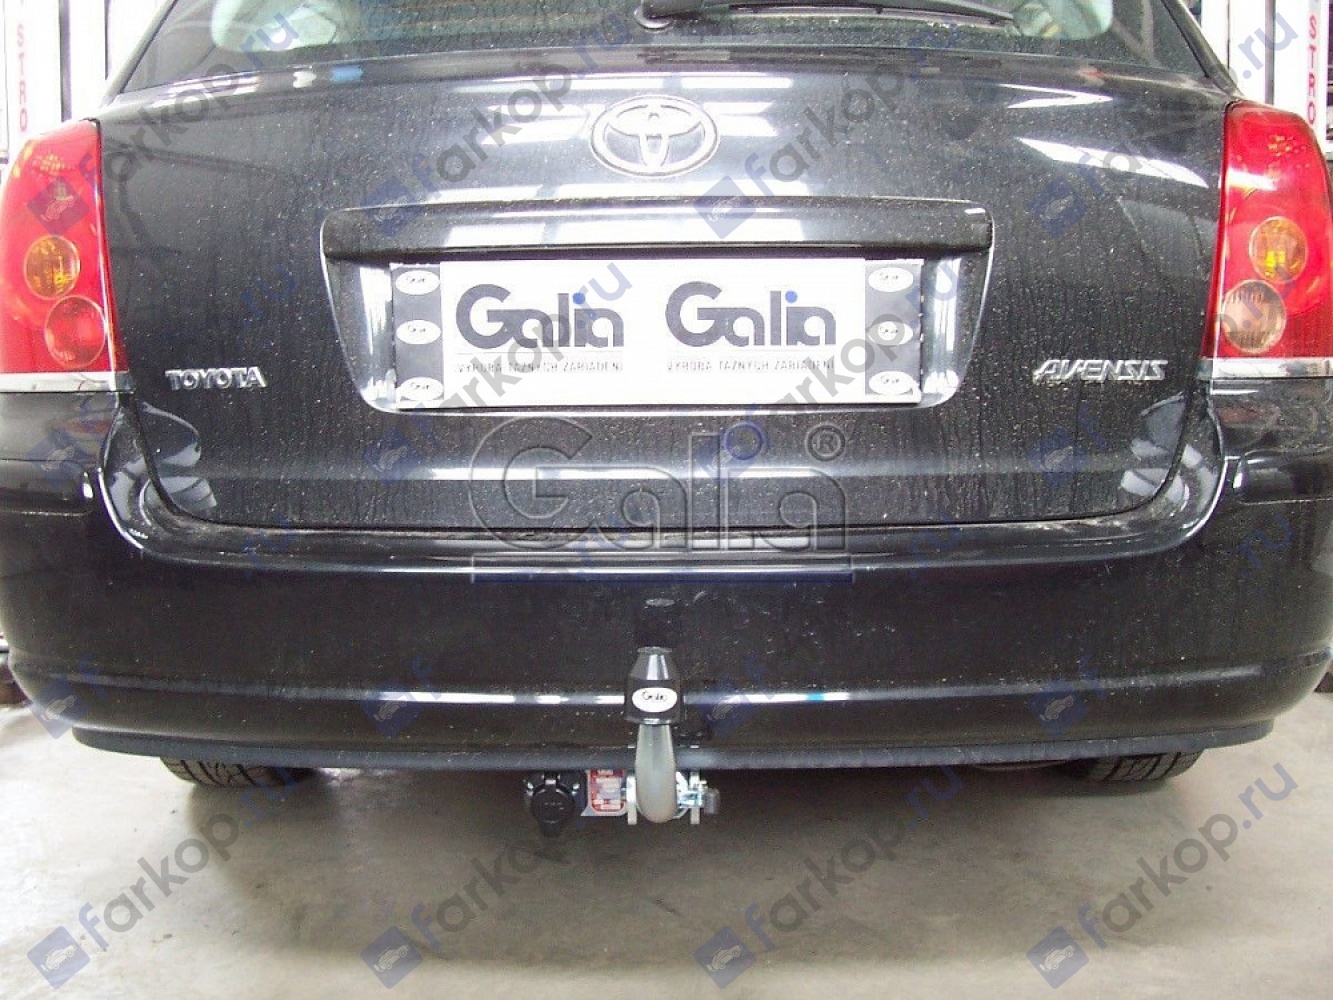 Фаркоп Galia для Toyota Avensis (универсал) 2003-2009 T055C в 